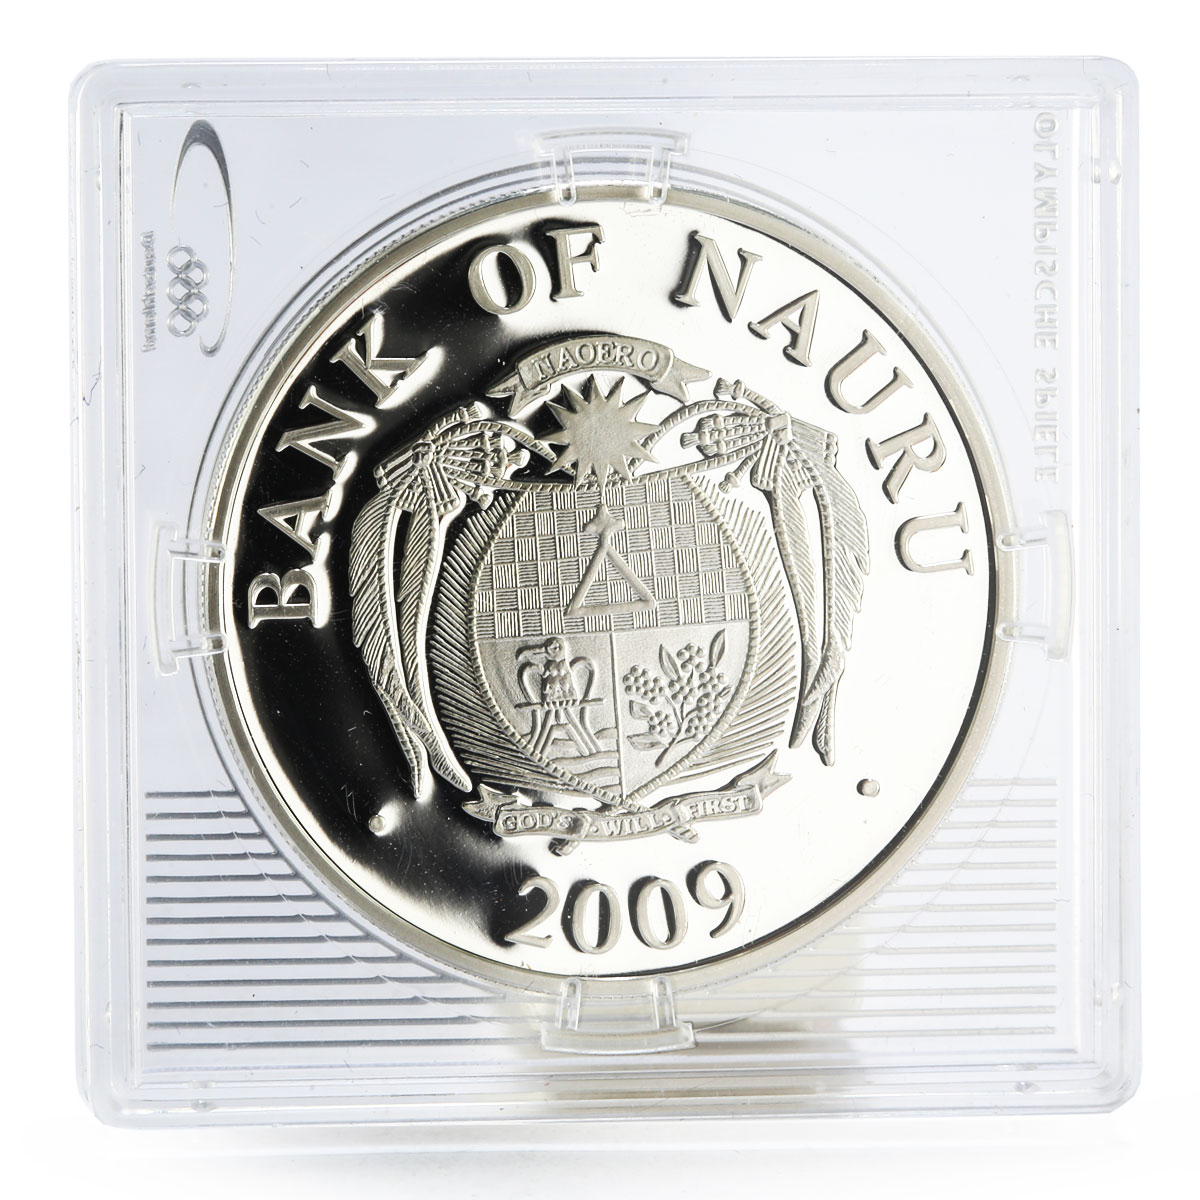 Nauru 10 dollars London Olympic Games series Swimming proof silver coin 2009